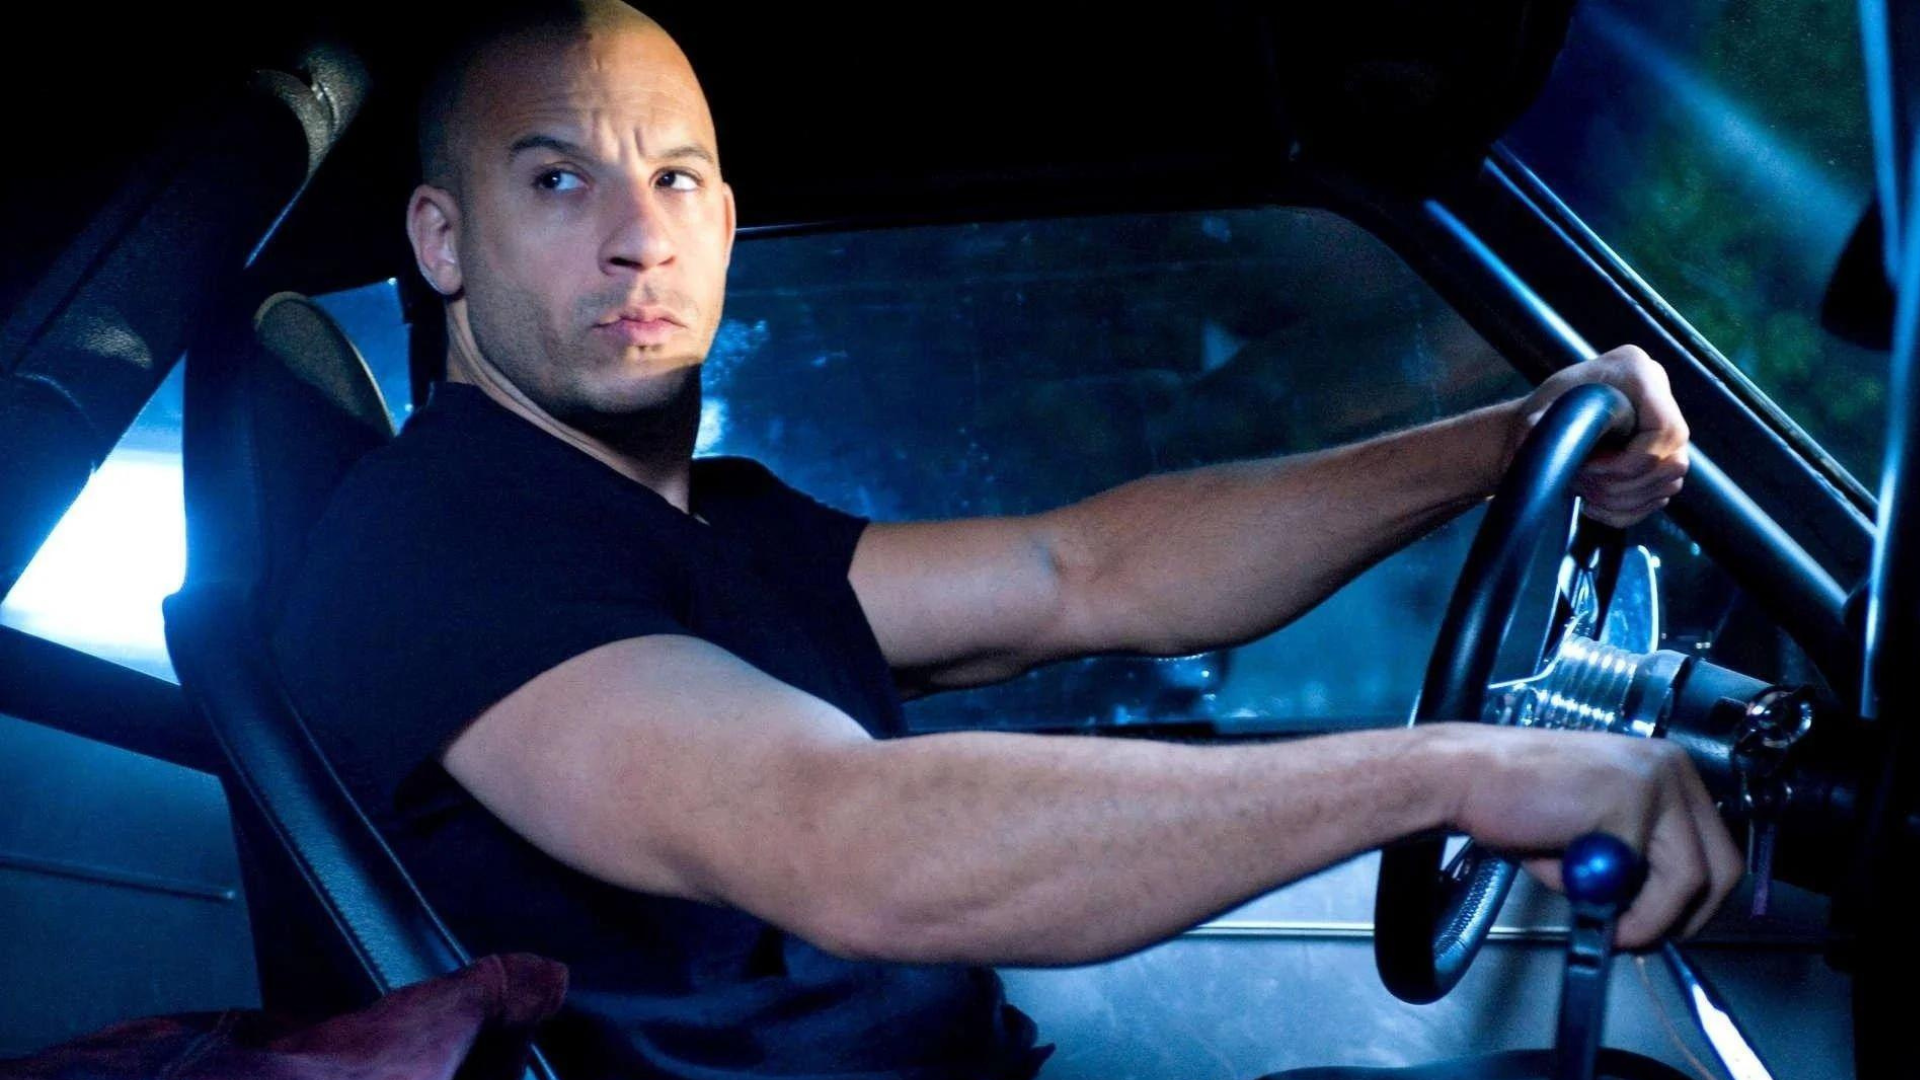 Vin diesel wearing black shirt while driving a car